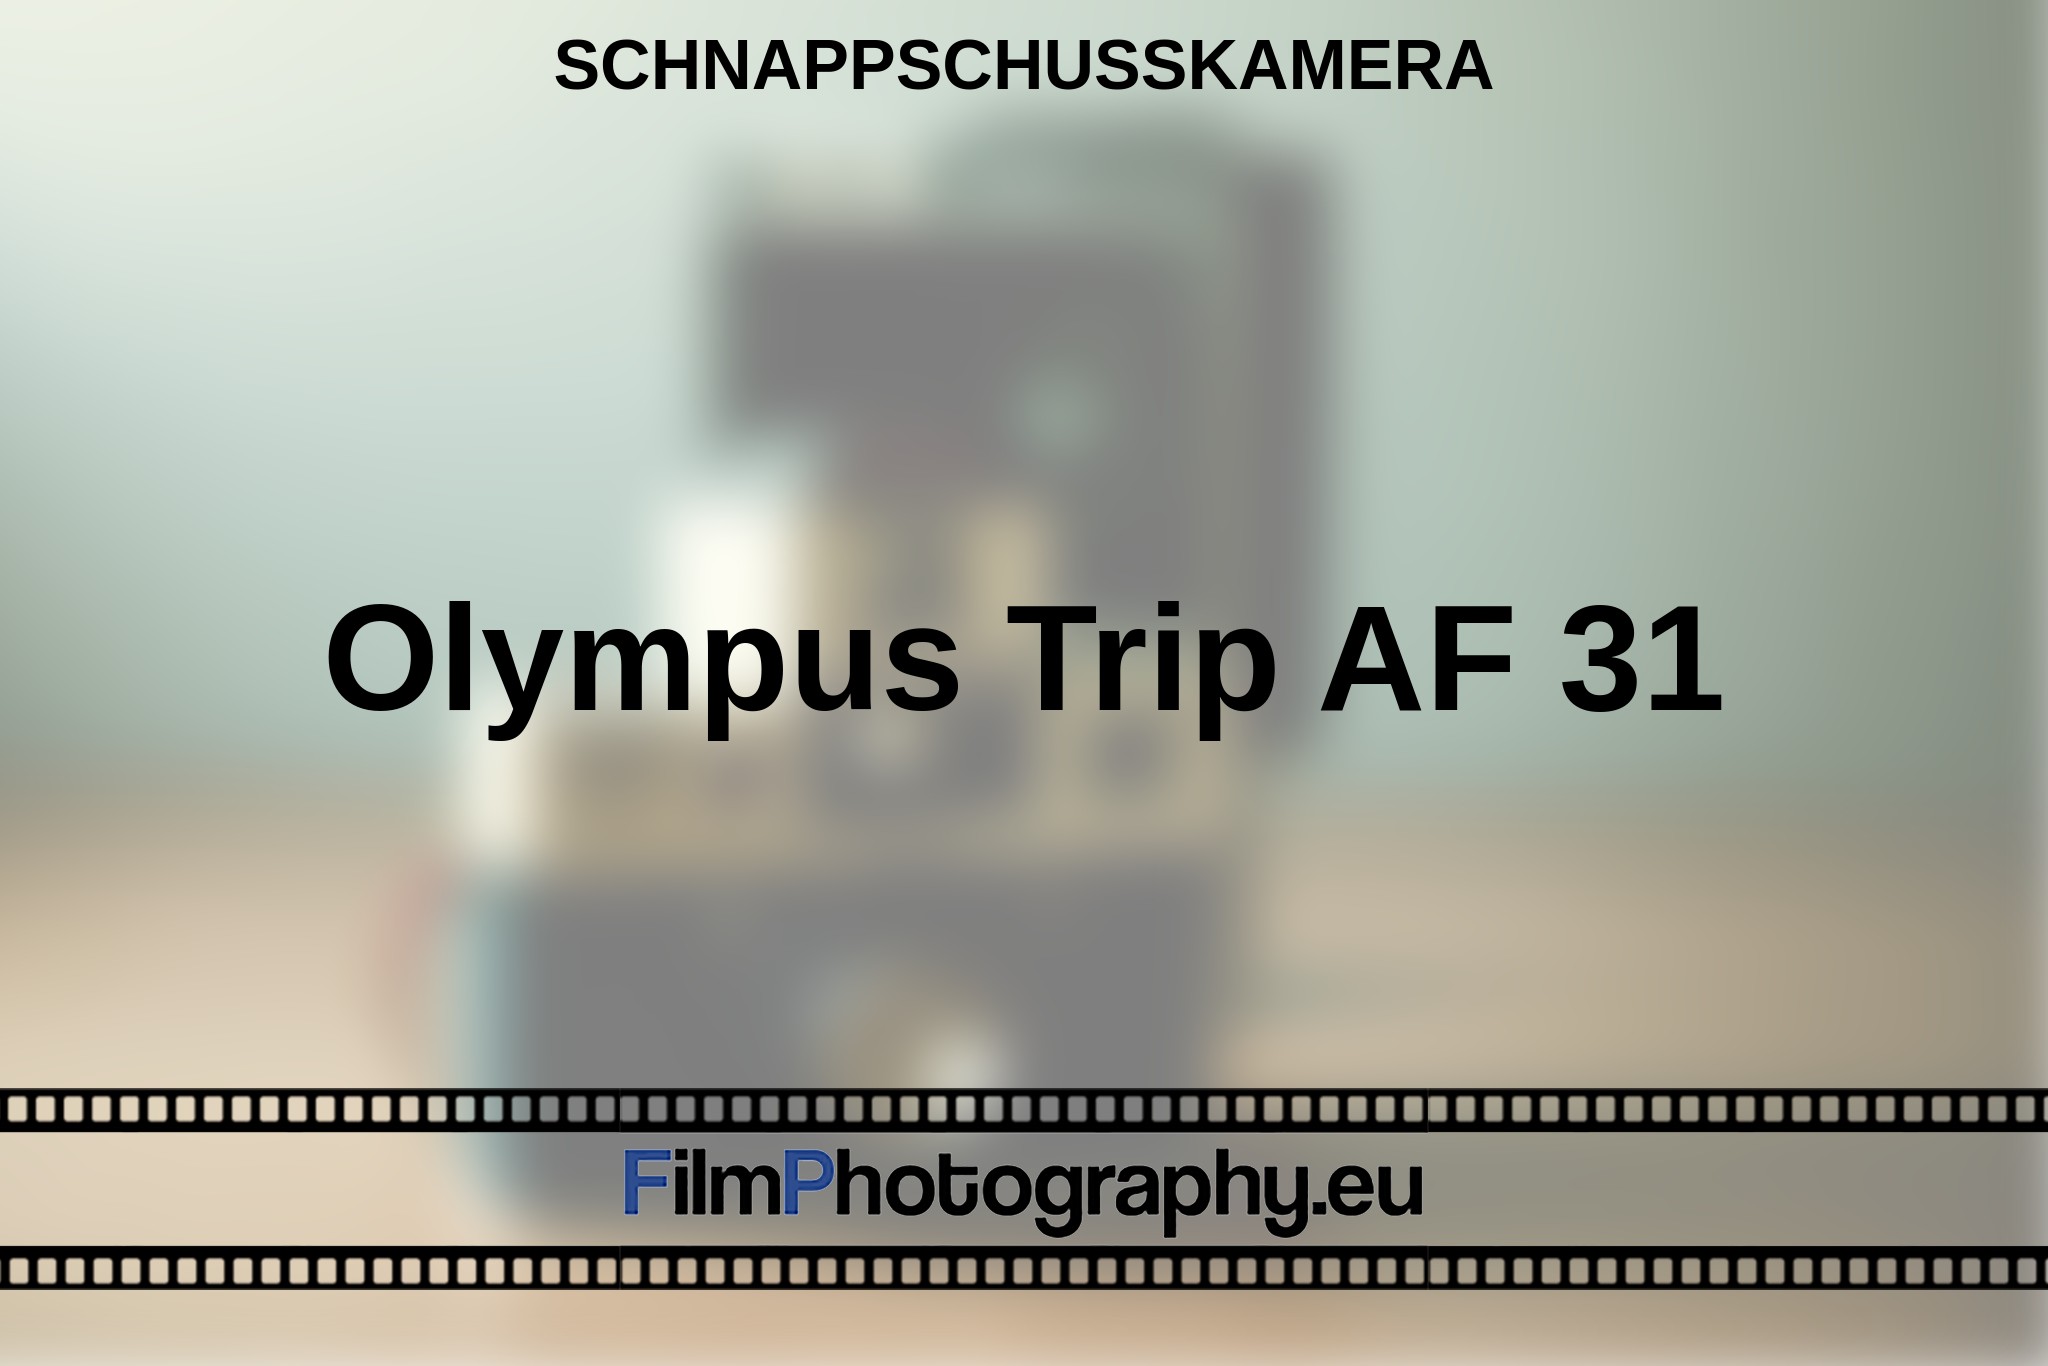 olympus-trip-af-31-schnappschusskamera-bnv.jpg